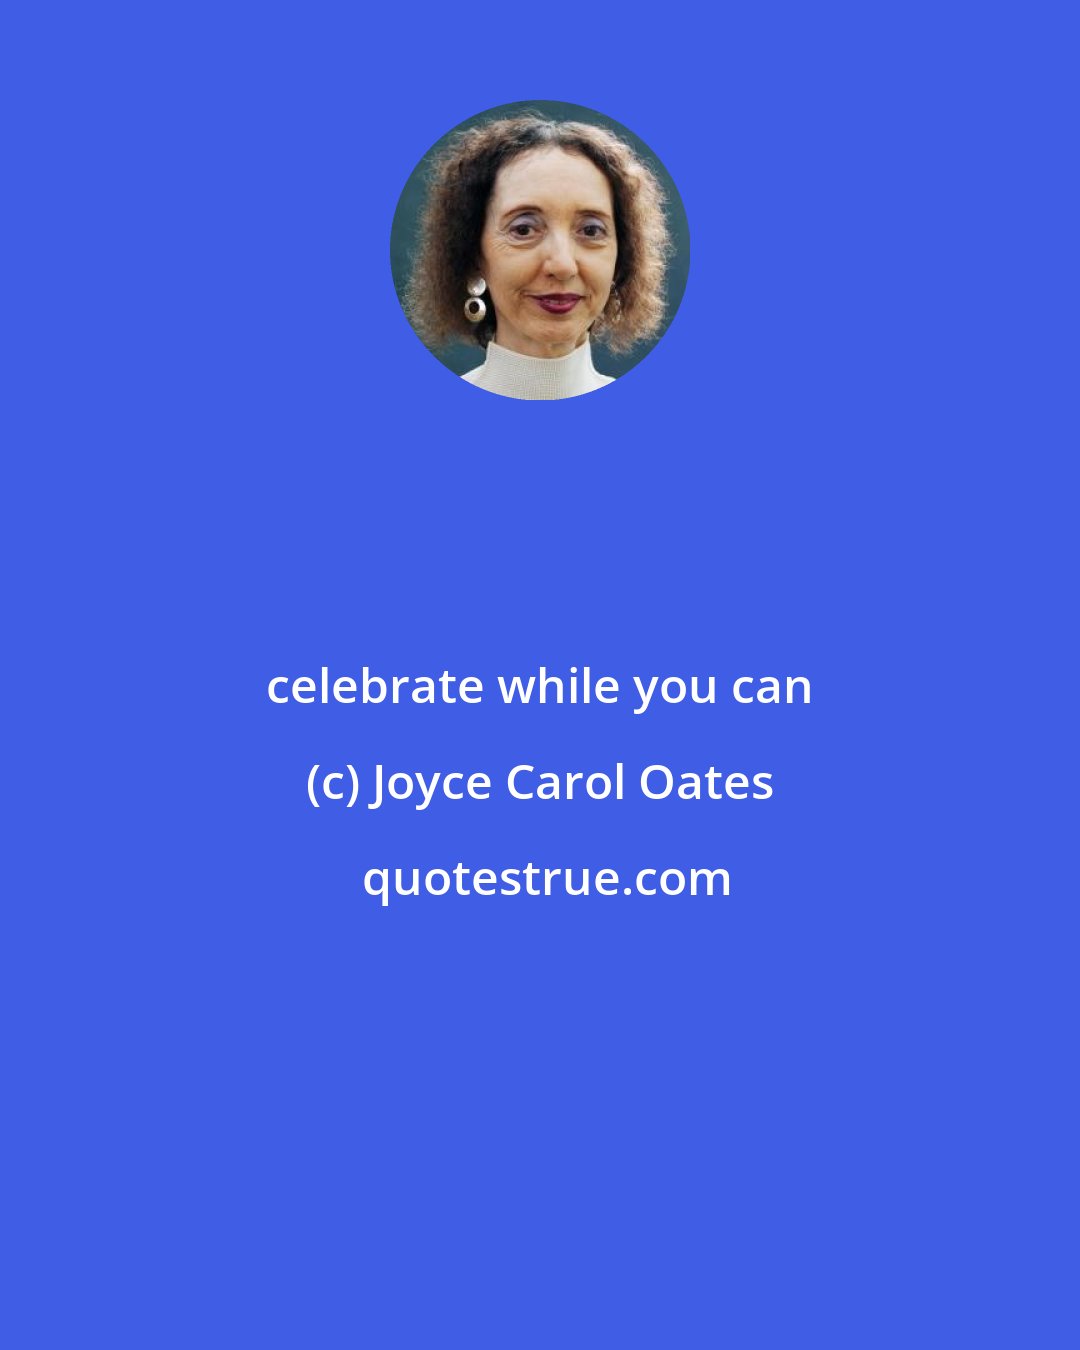 Joyce Carol Oates: celebrate while you can